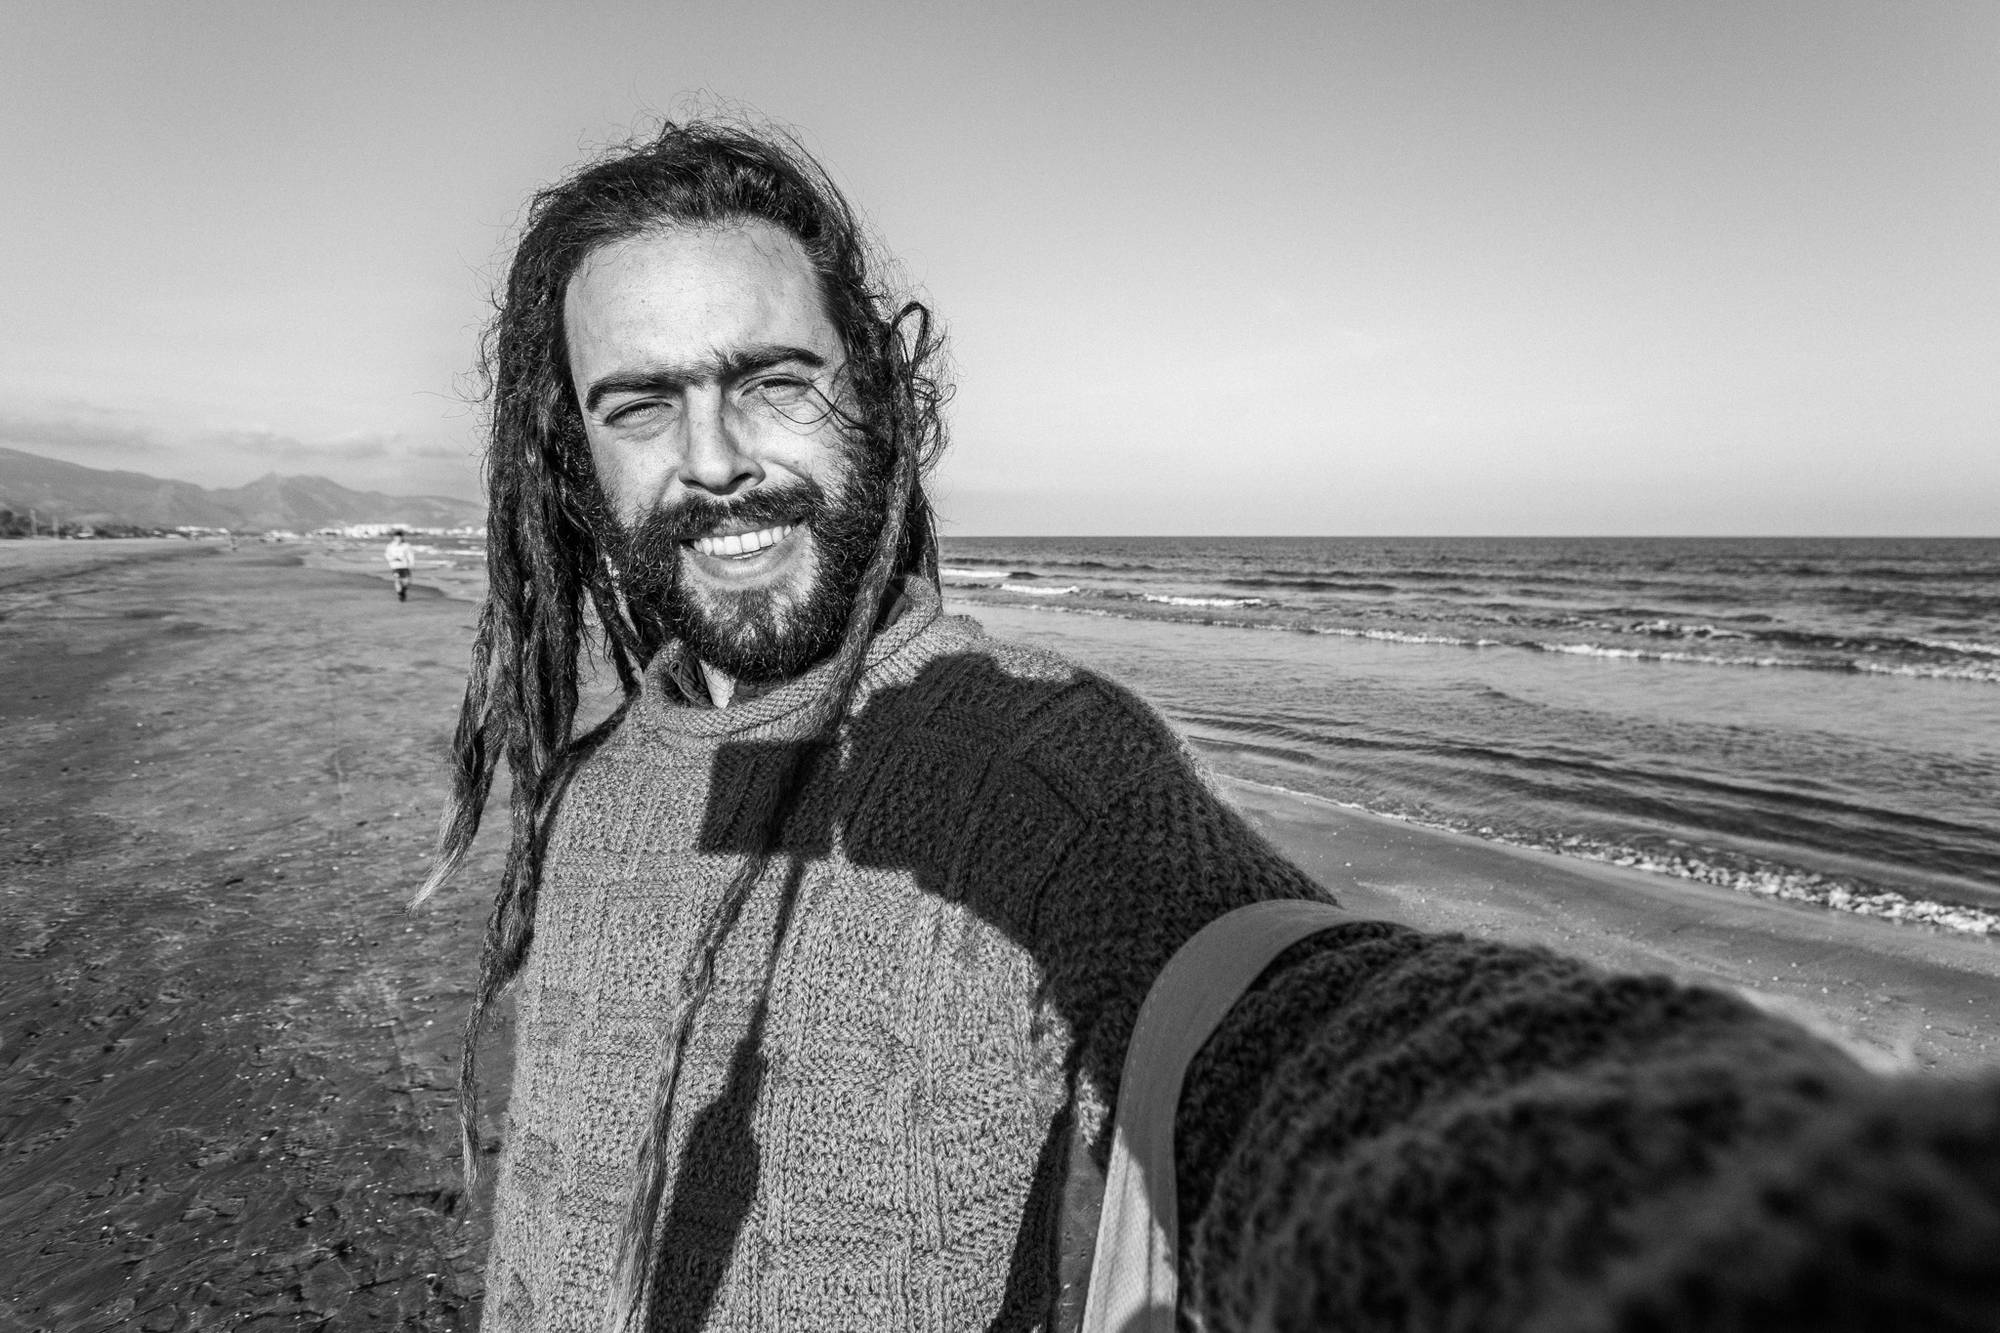 A self-portrait on the beautiful day on the beach in Castellon de la Plana, December 2019